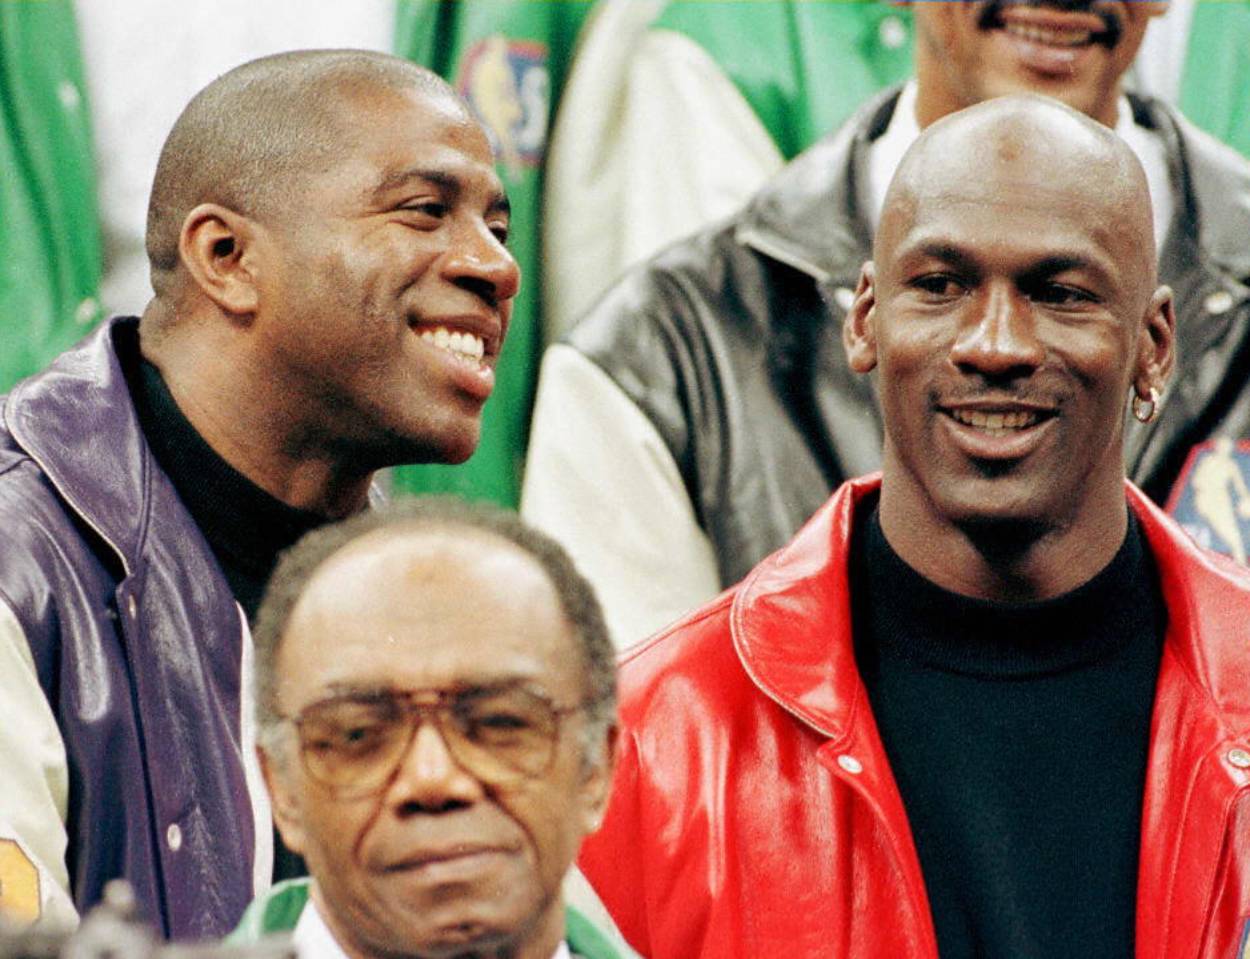 NBA legends Magic Johnson (L) and Michael Jordan.